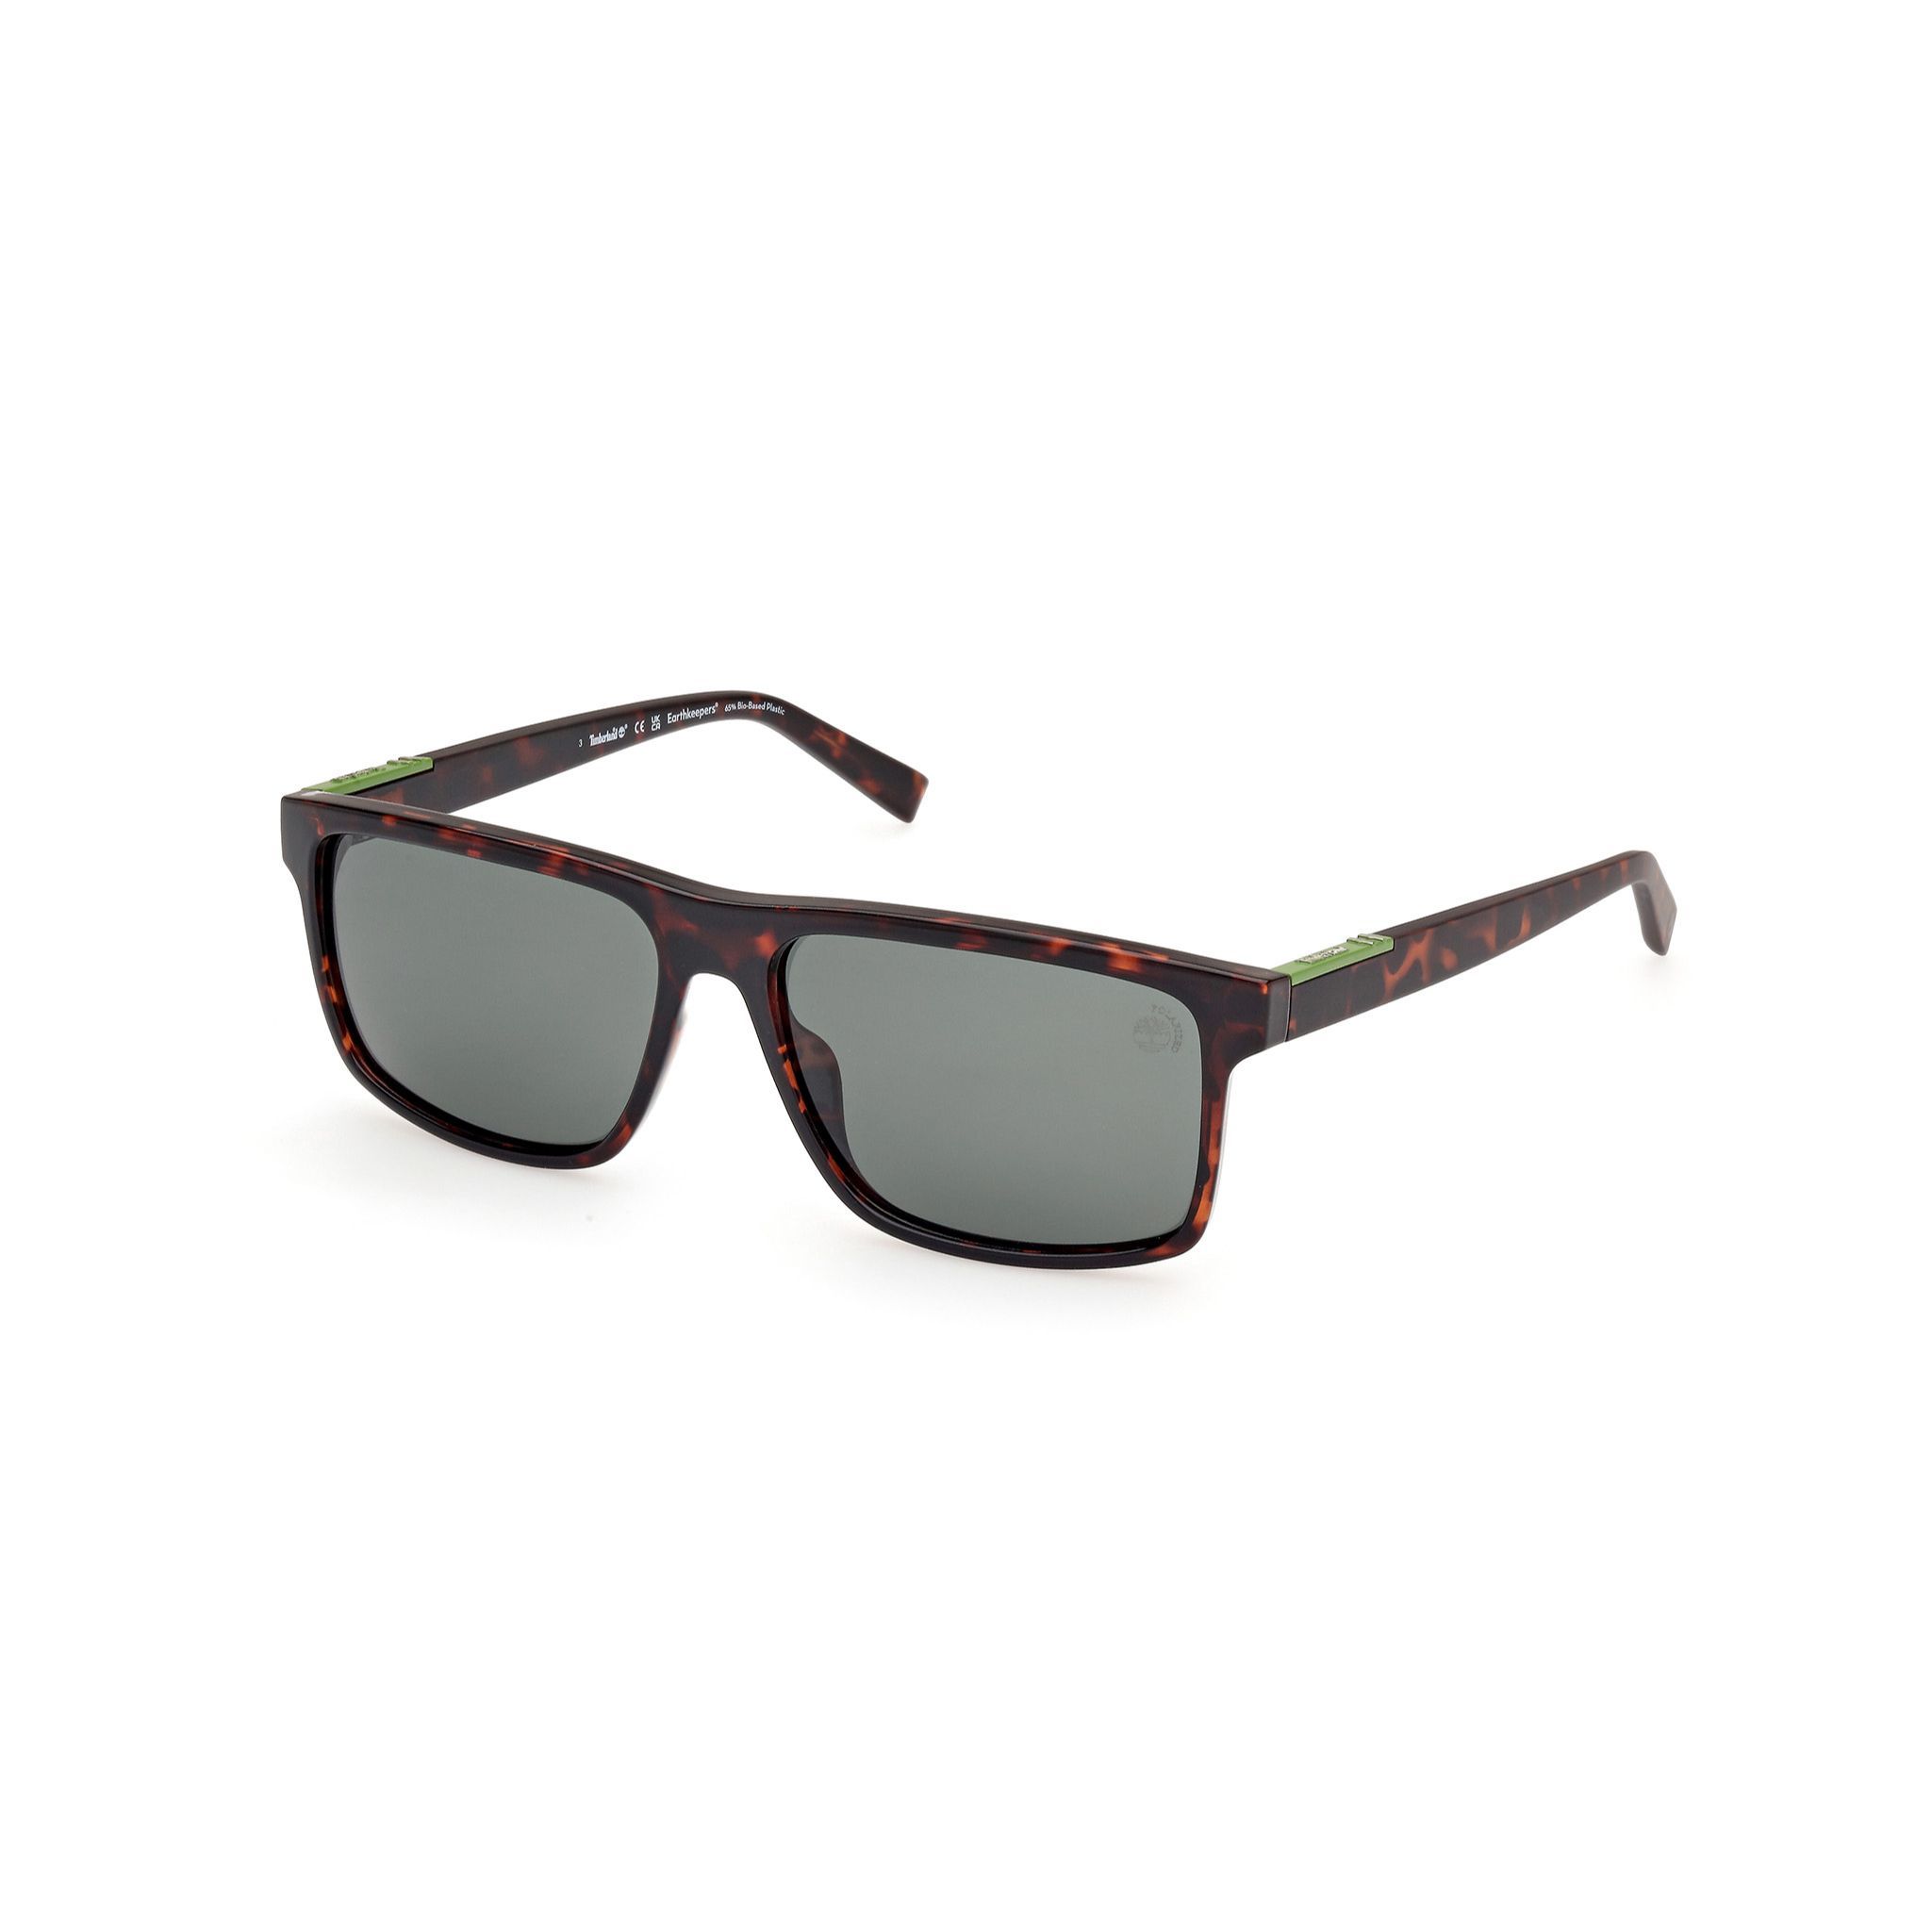 TB00006 Rectangle Sunglasses 52R - size 58